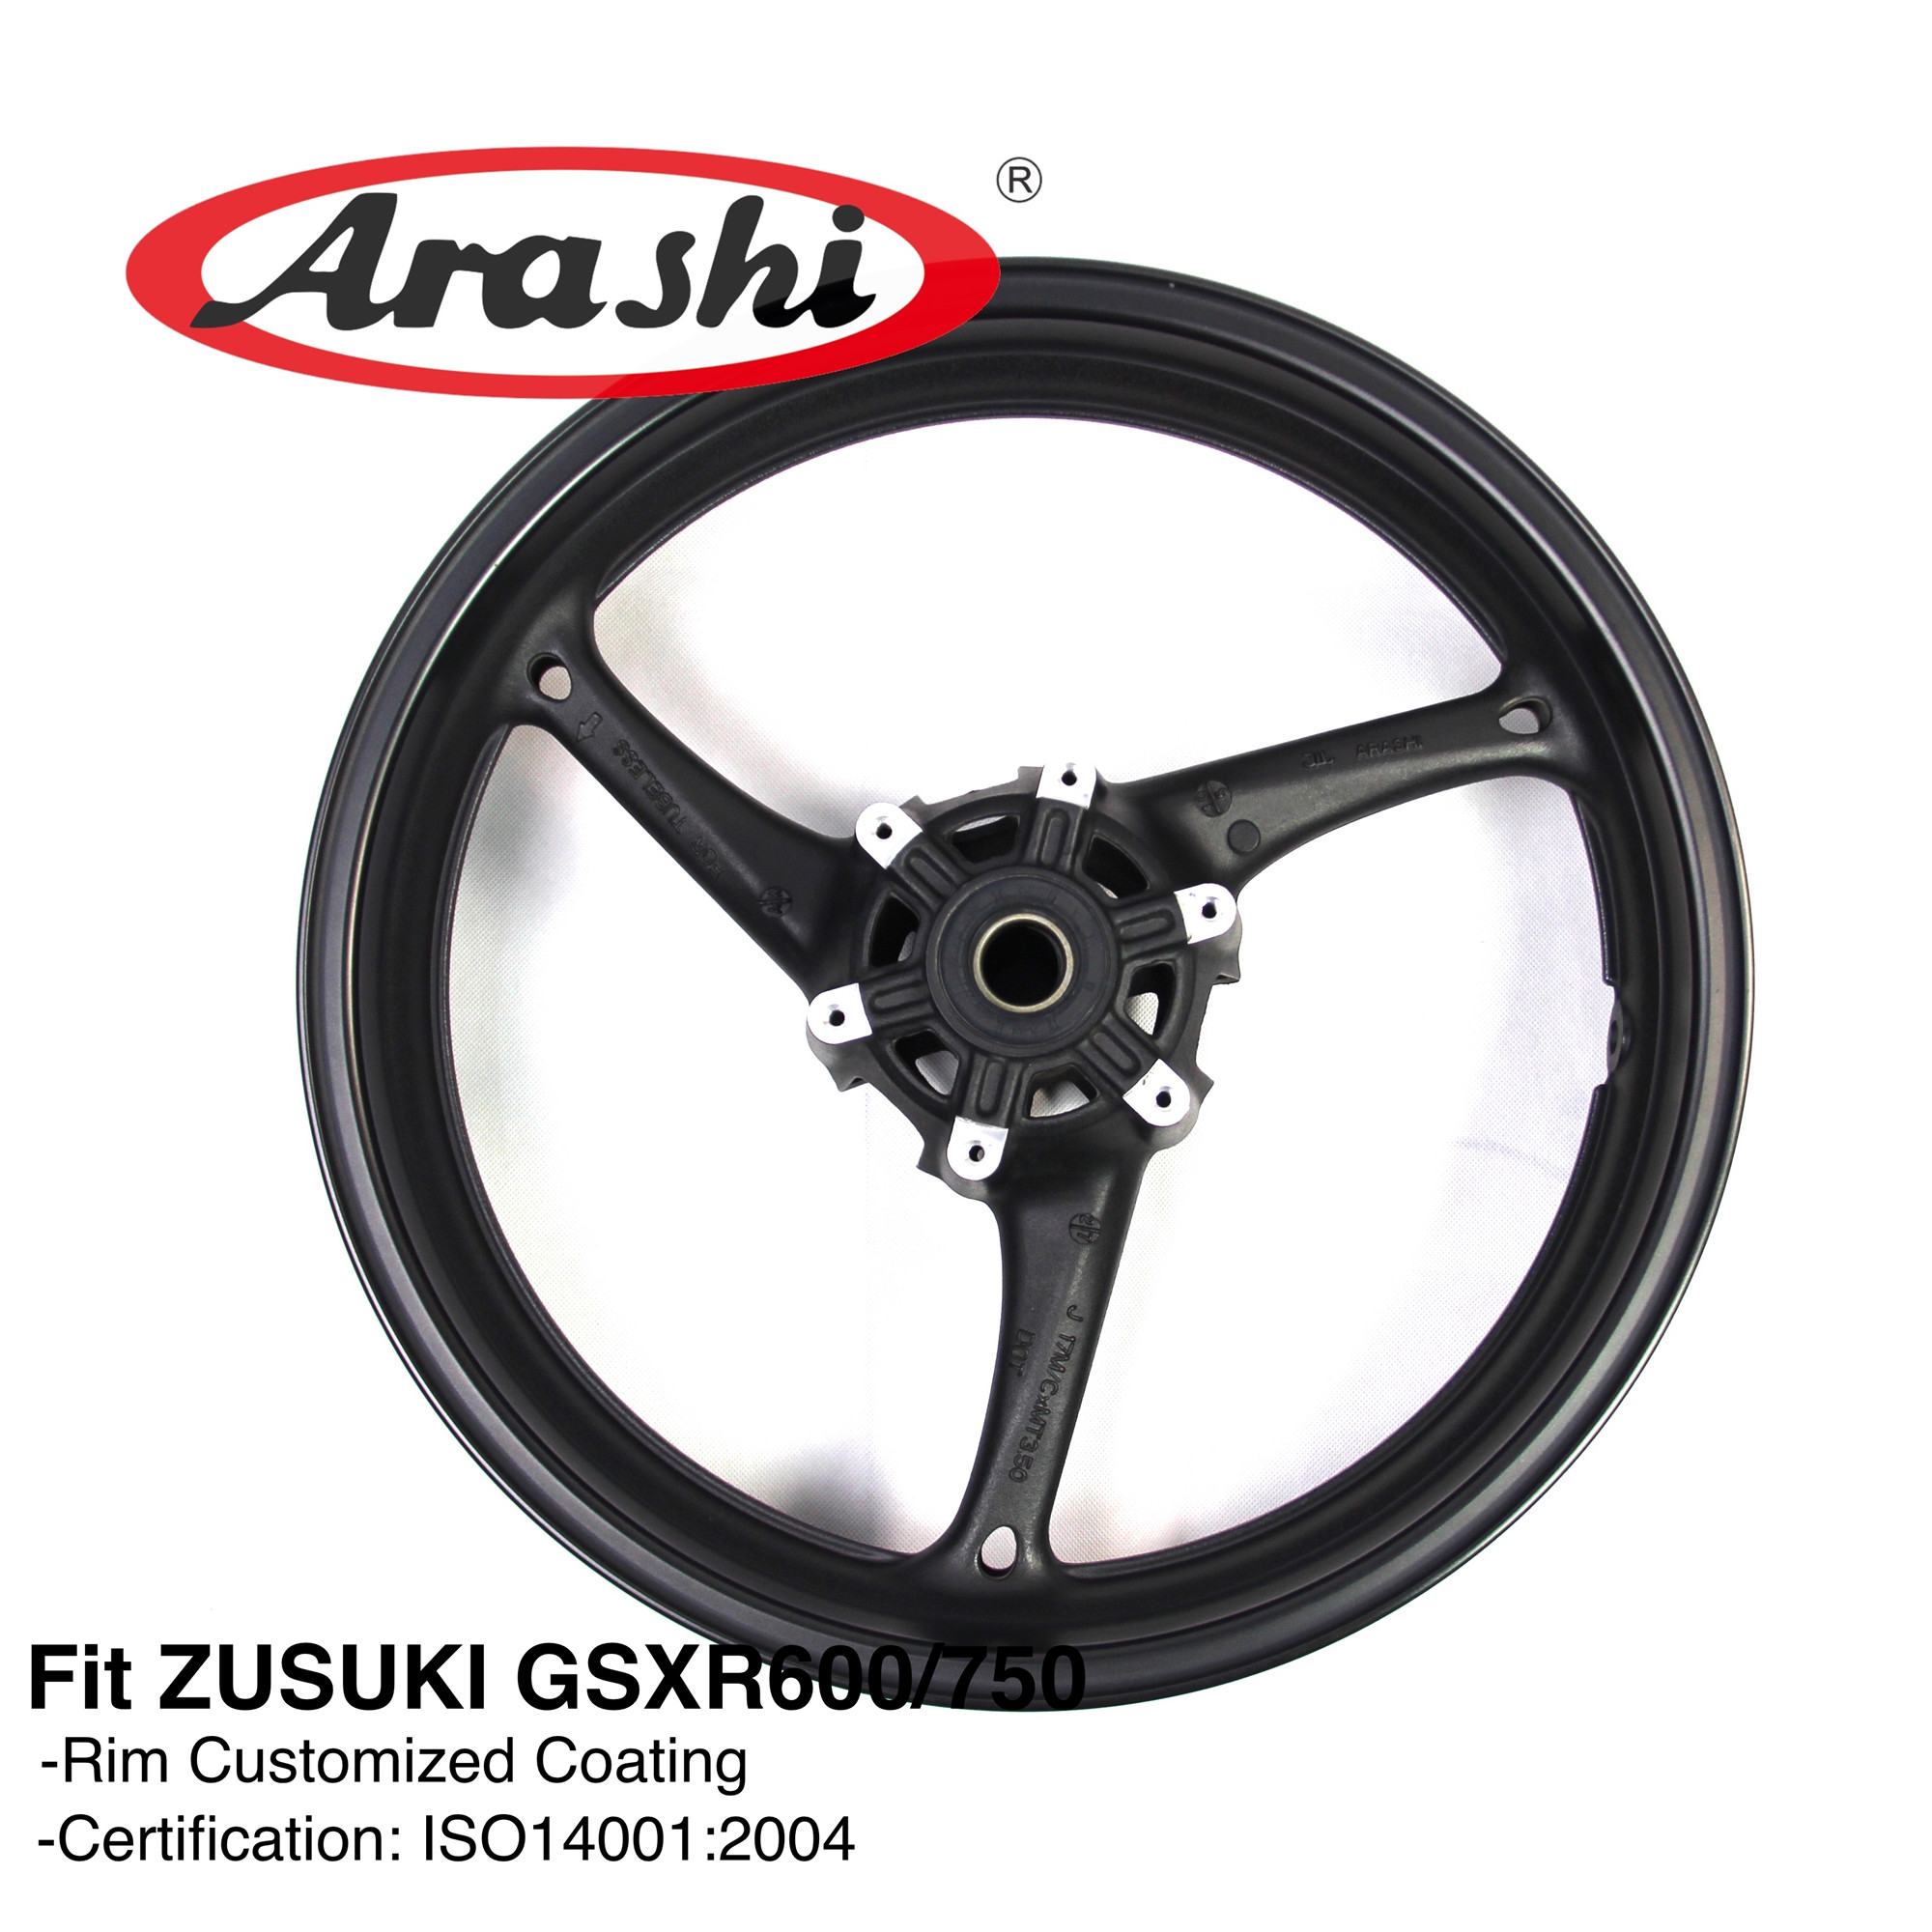 Arashi Pour Suzuki GSXR 600 750 2011 - 2016 Jante Avant Moto Accessoires GSX R GSX-R GSXR600 GSXR750 2012 2013 2014 2015